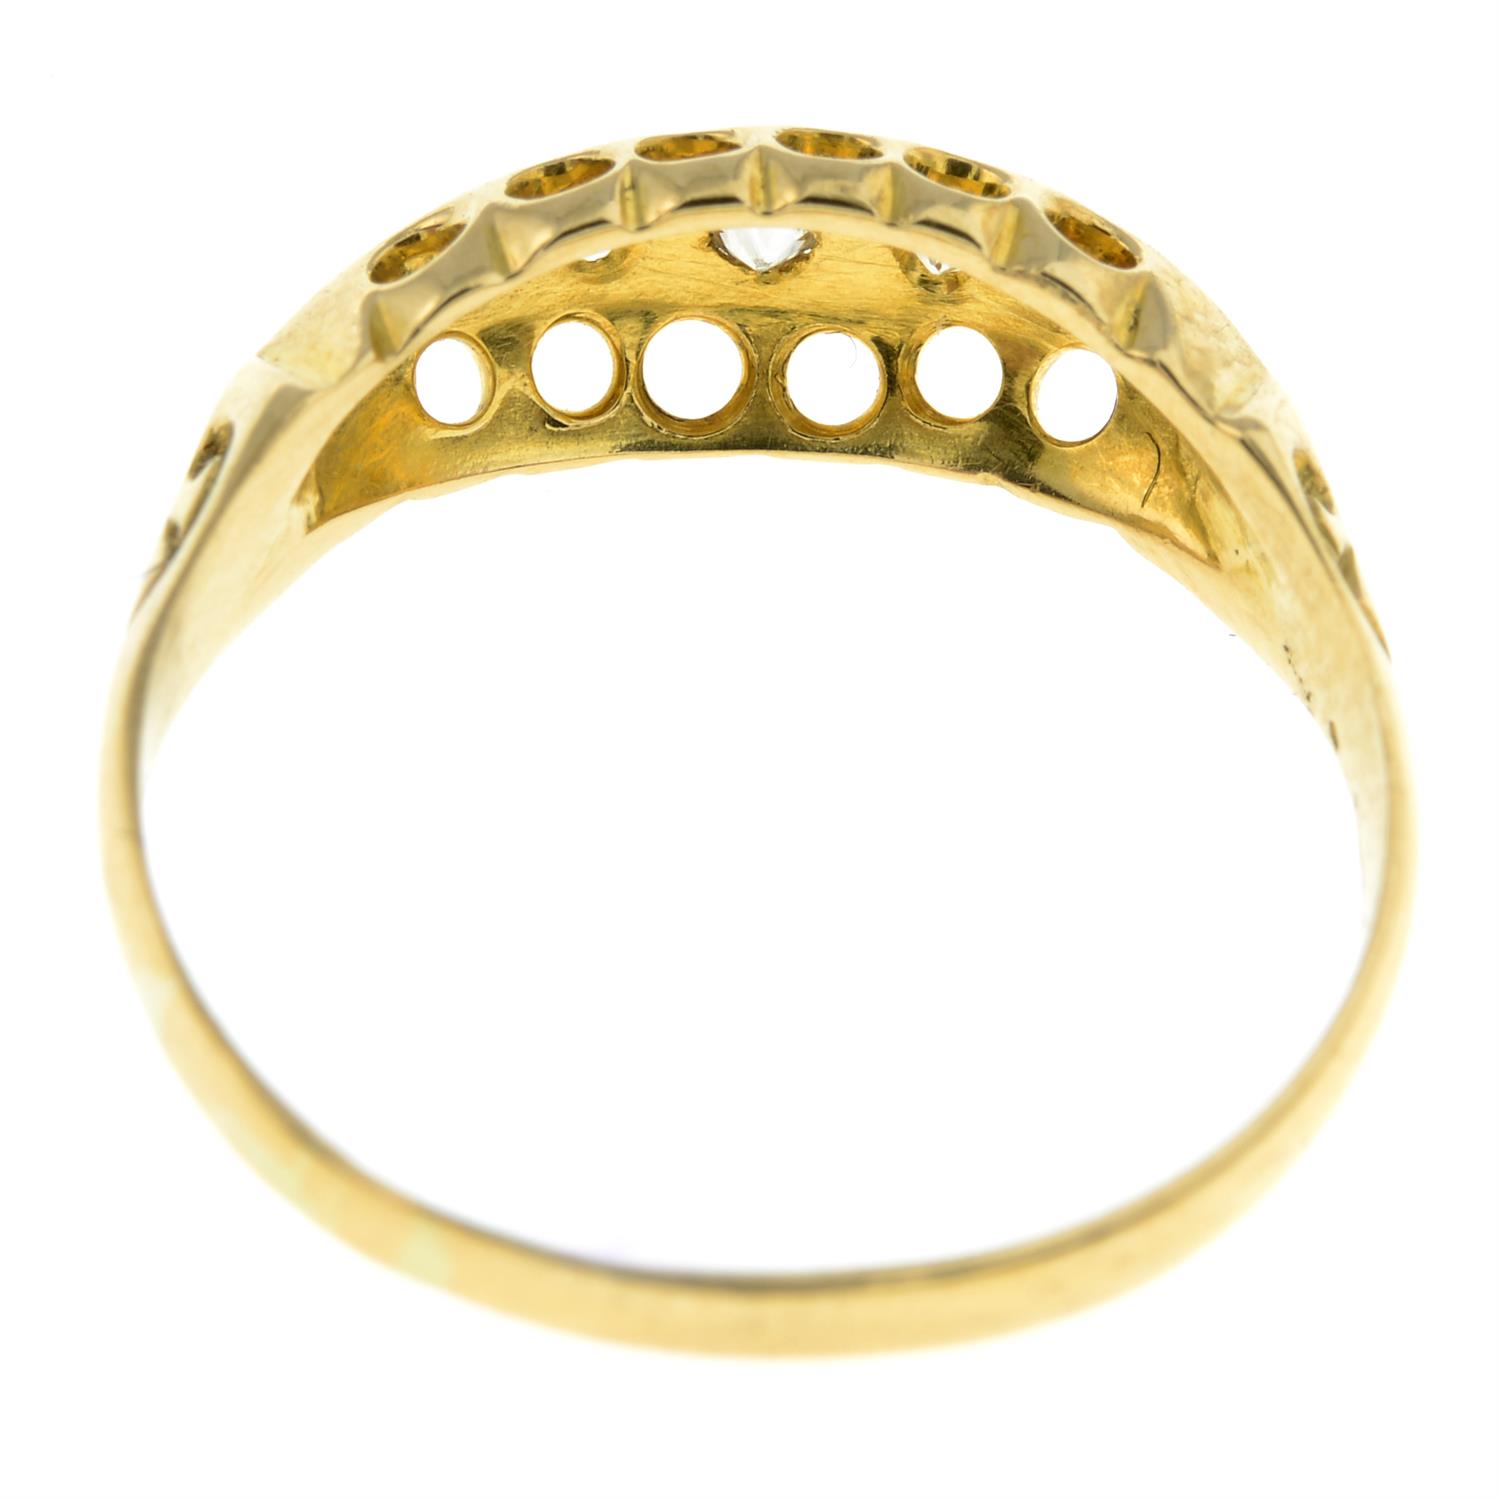 Edwardian 18ct gold diamond ring - Image 2 of 2